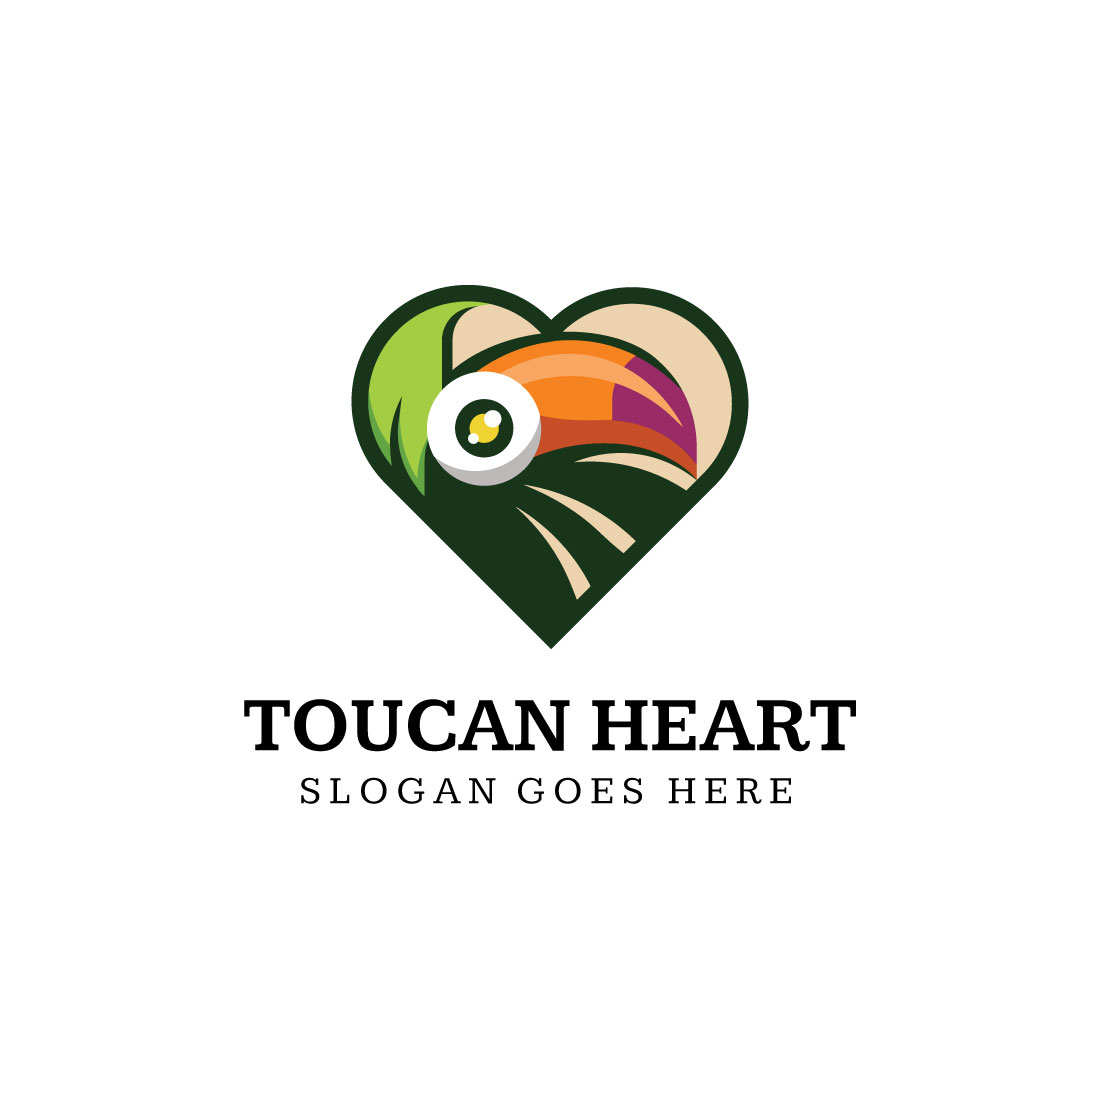 Toucan logo illustration vector flat design cover image.